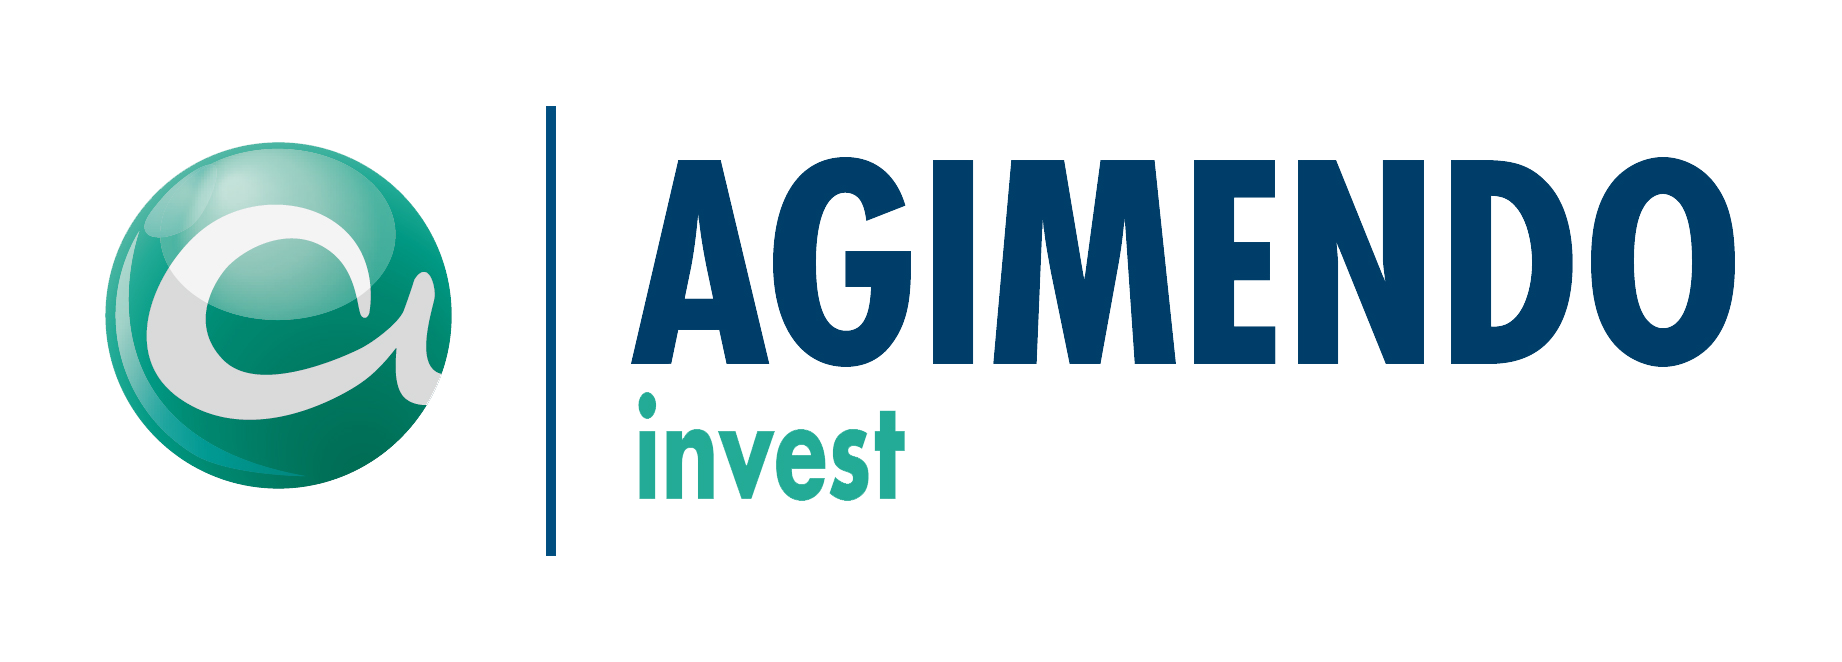 AGIMENDO.invest_small_frame-freigestellt